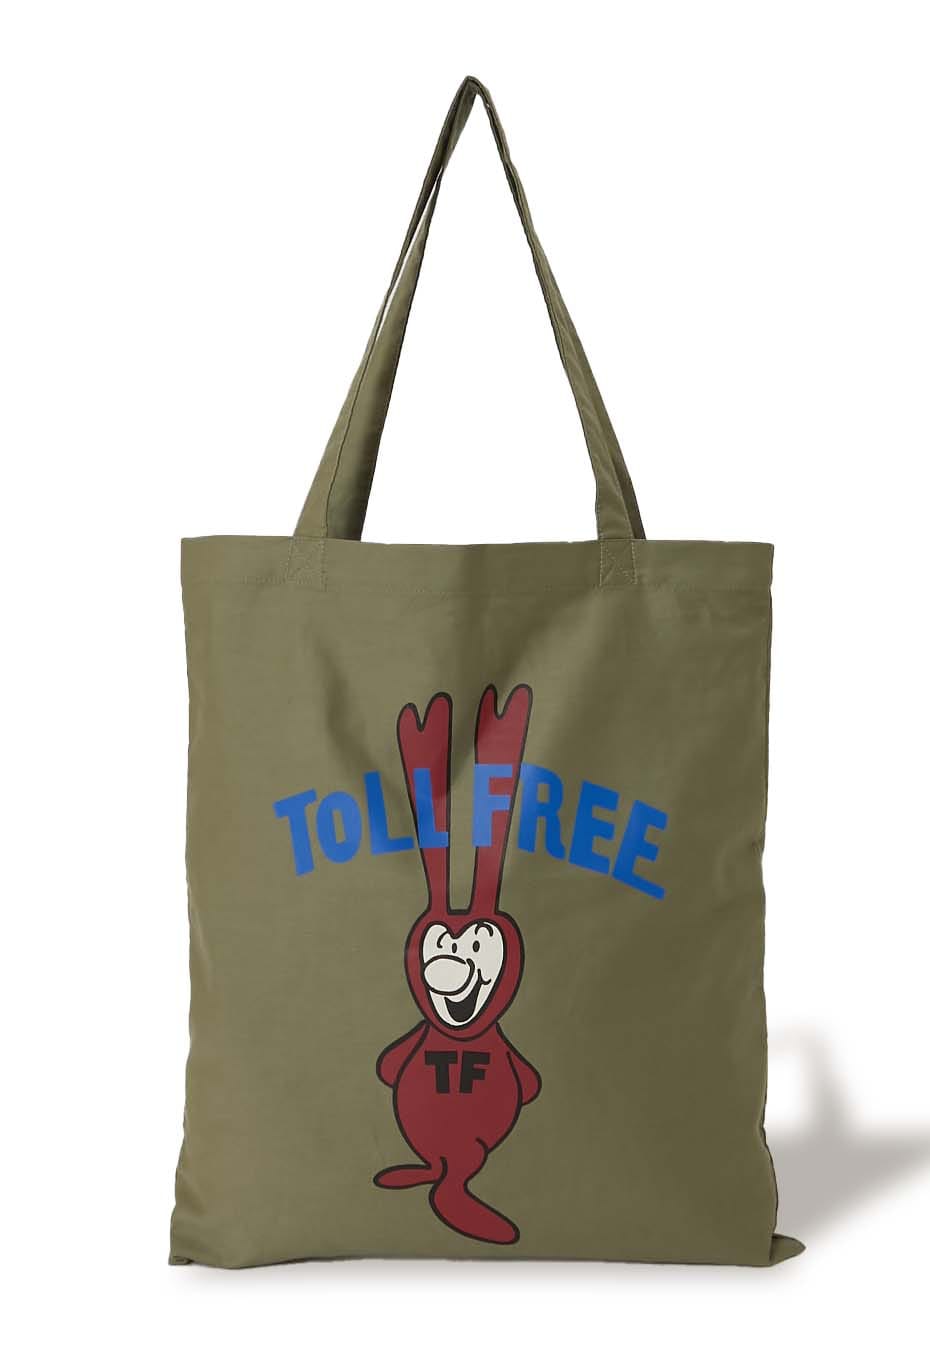 TOLL FREE Tallboy print tote bag